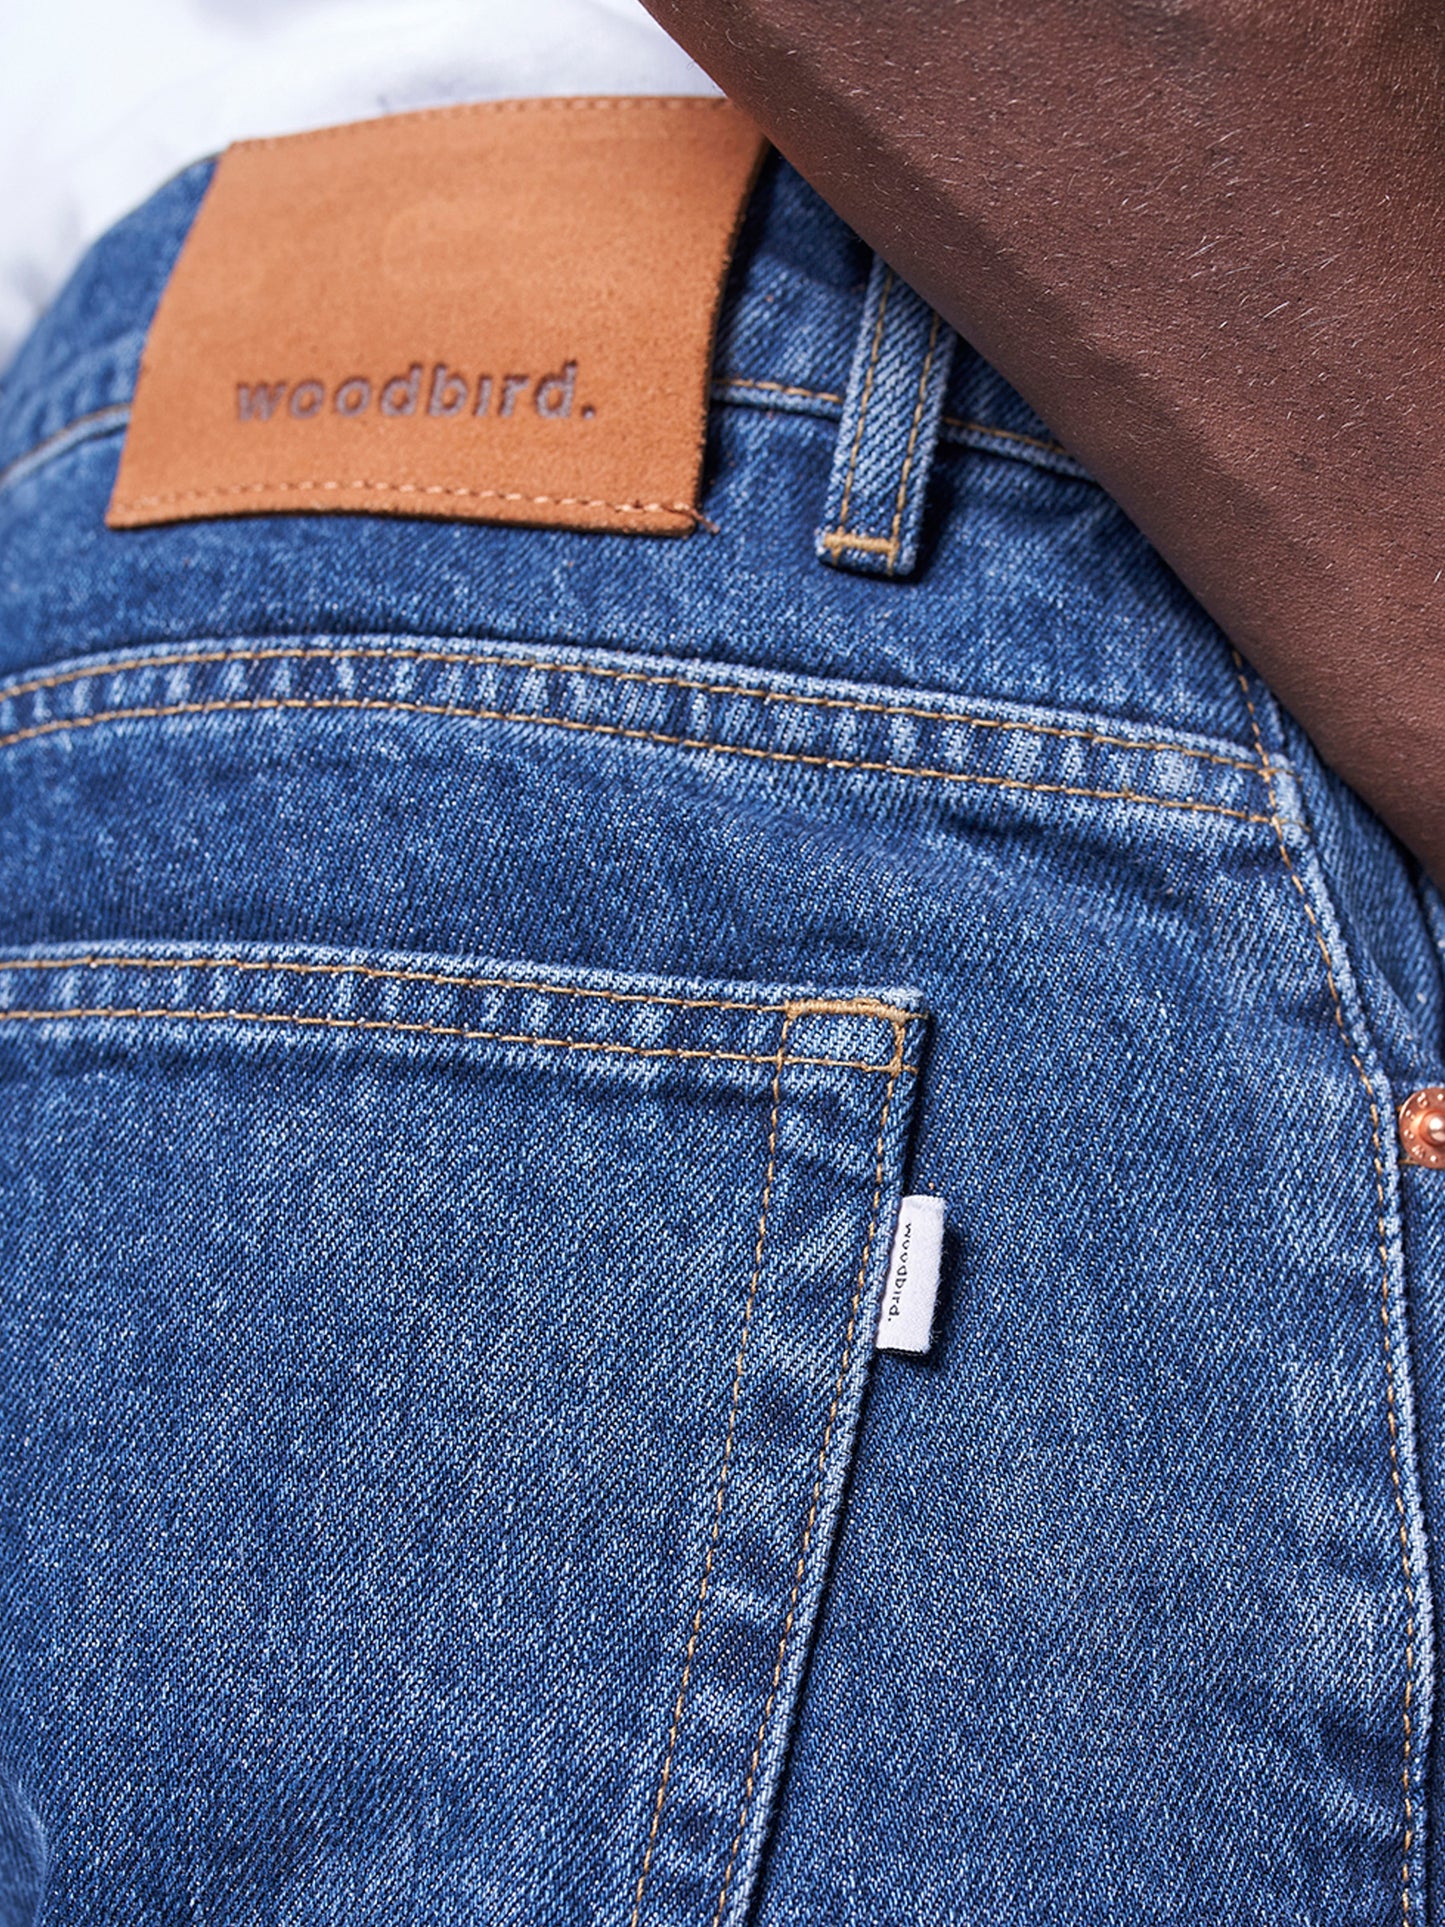 Woodbird Doc Dark Vintage Jeans Jeans Blue Vintage